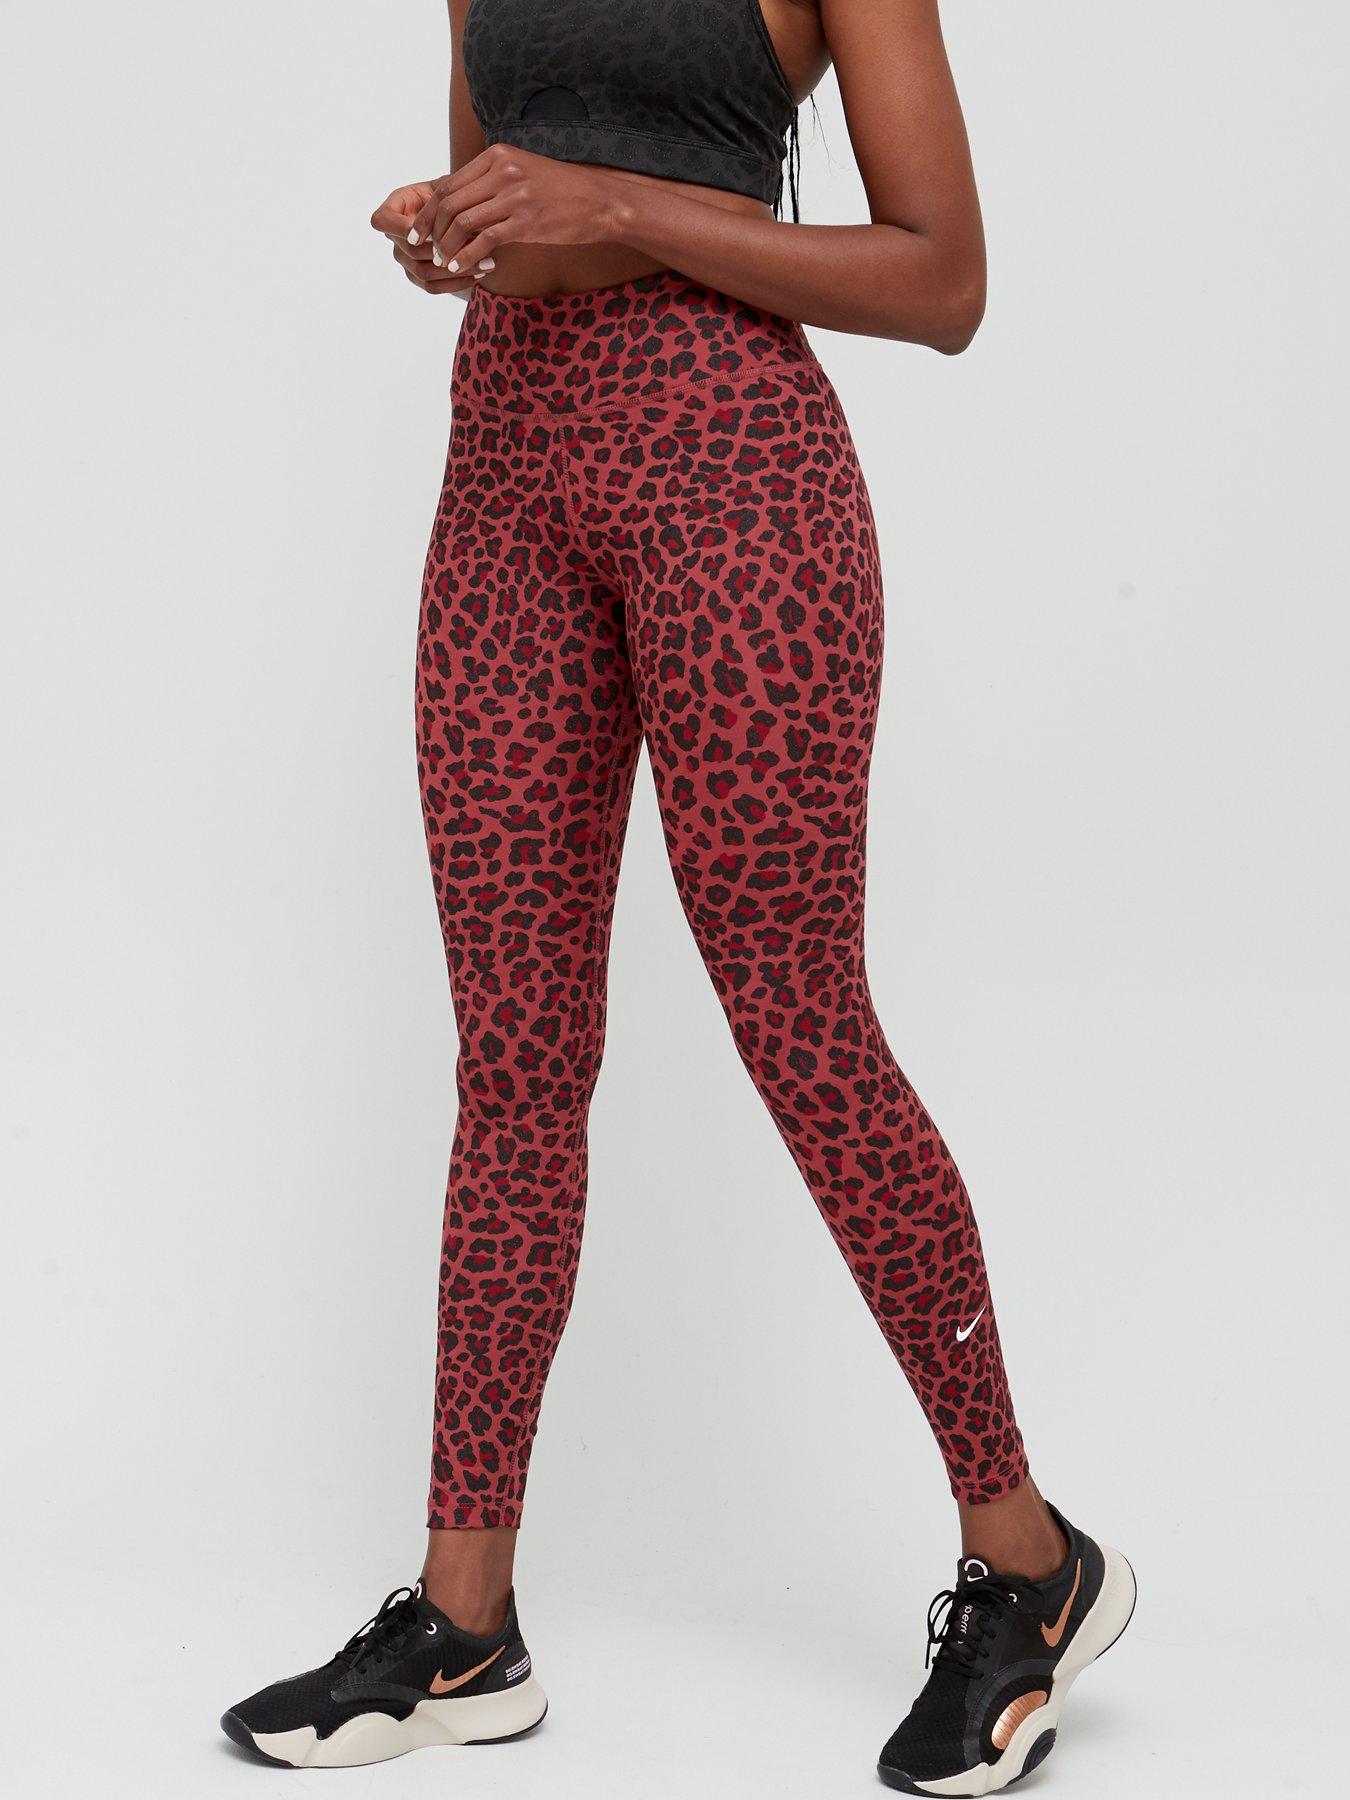 Escultura Pendiente compilar Nike The One Dri-FIT Leopard Print Leggings - Pink | very.co.uk